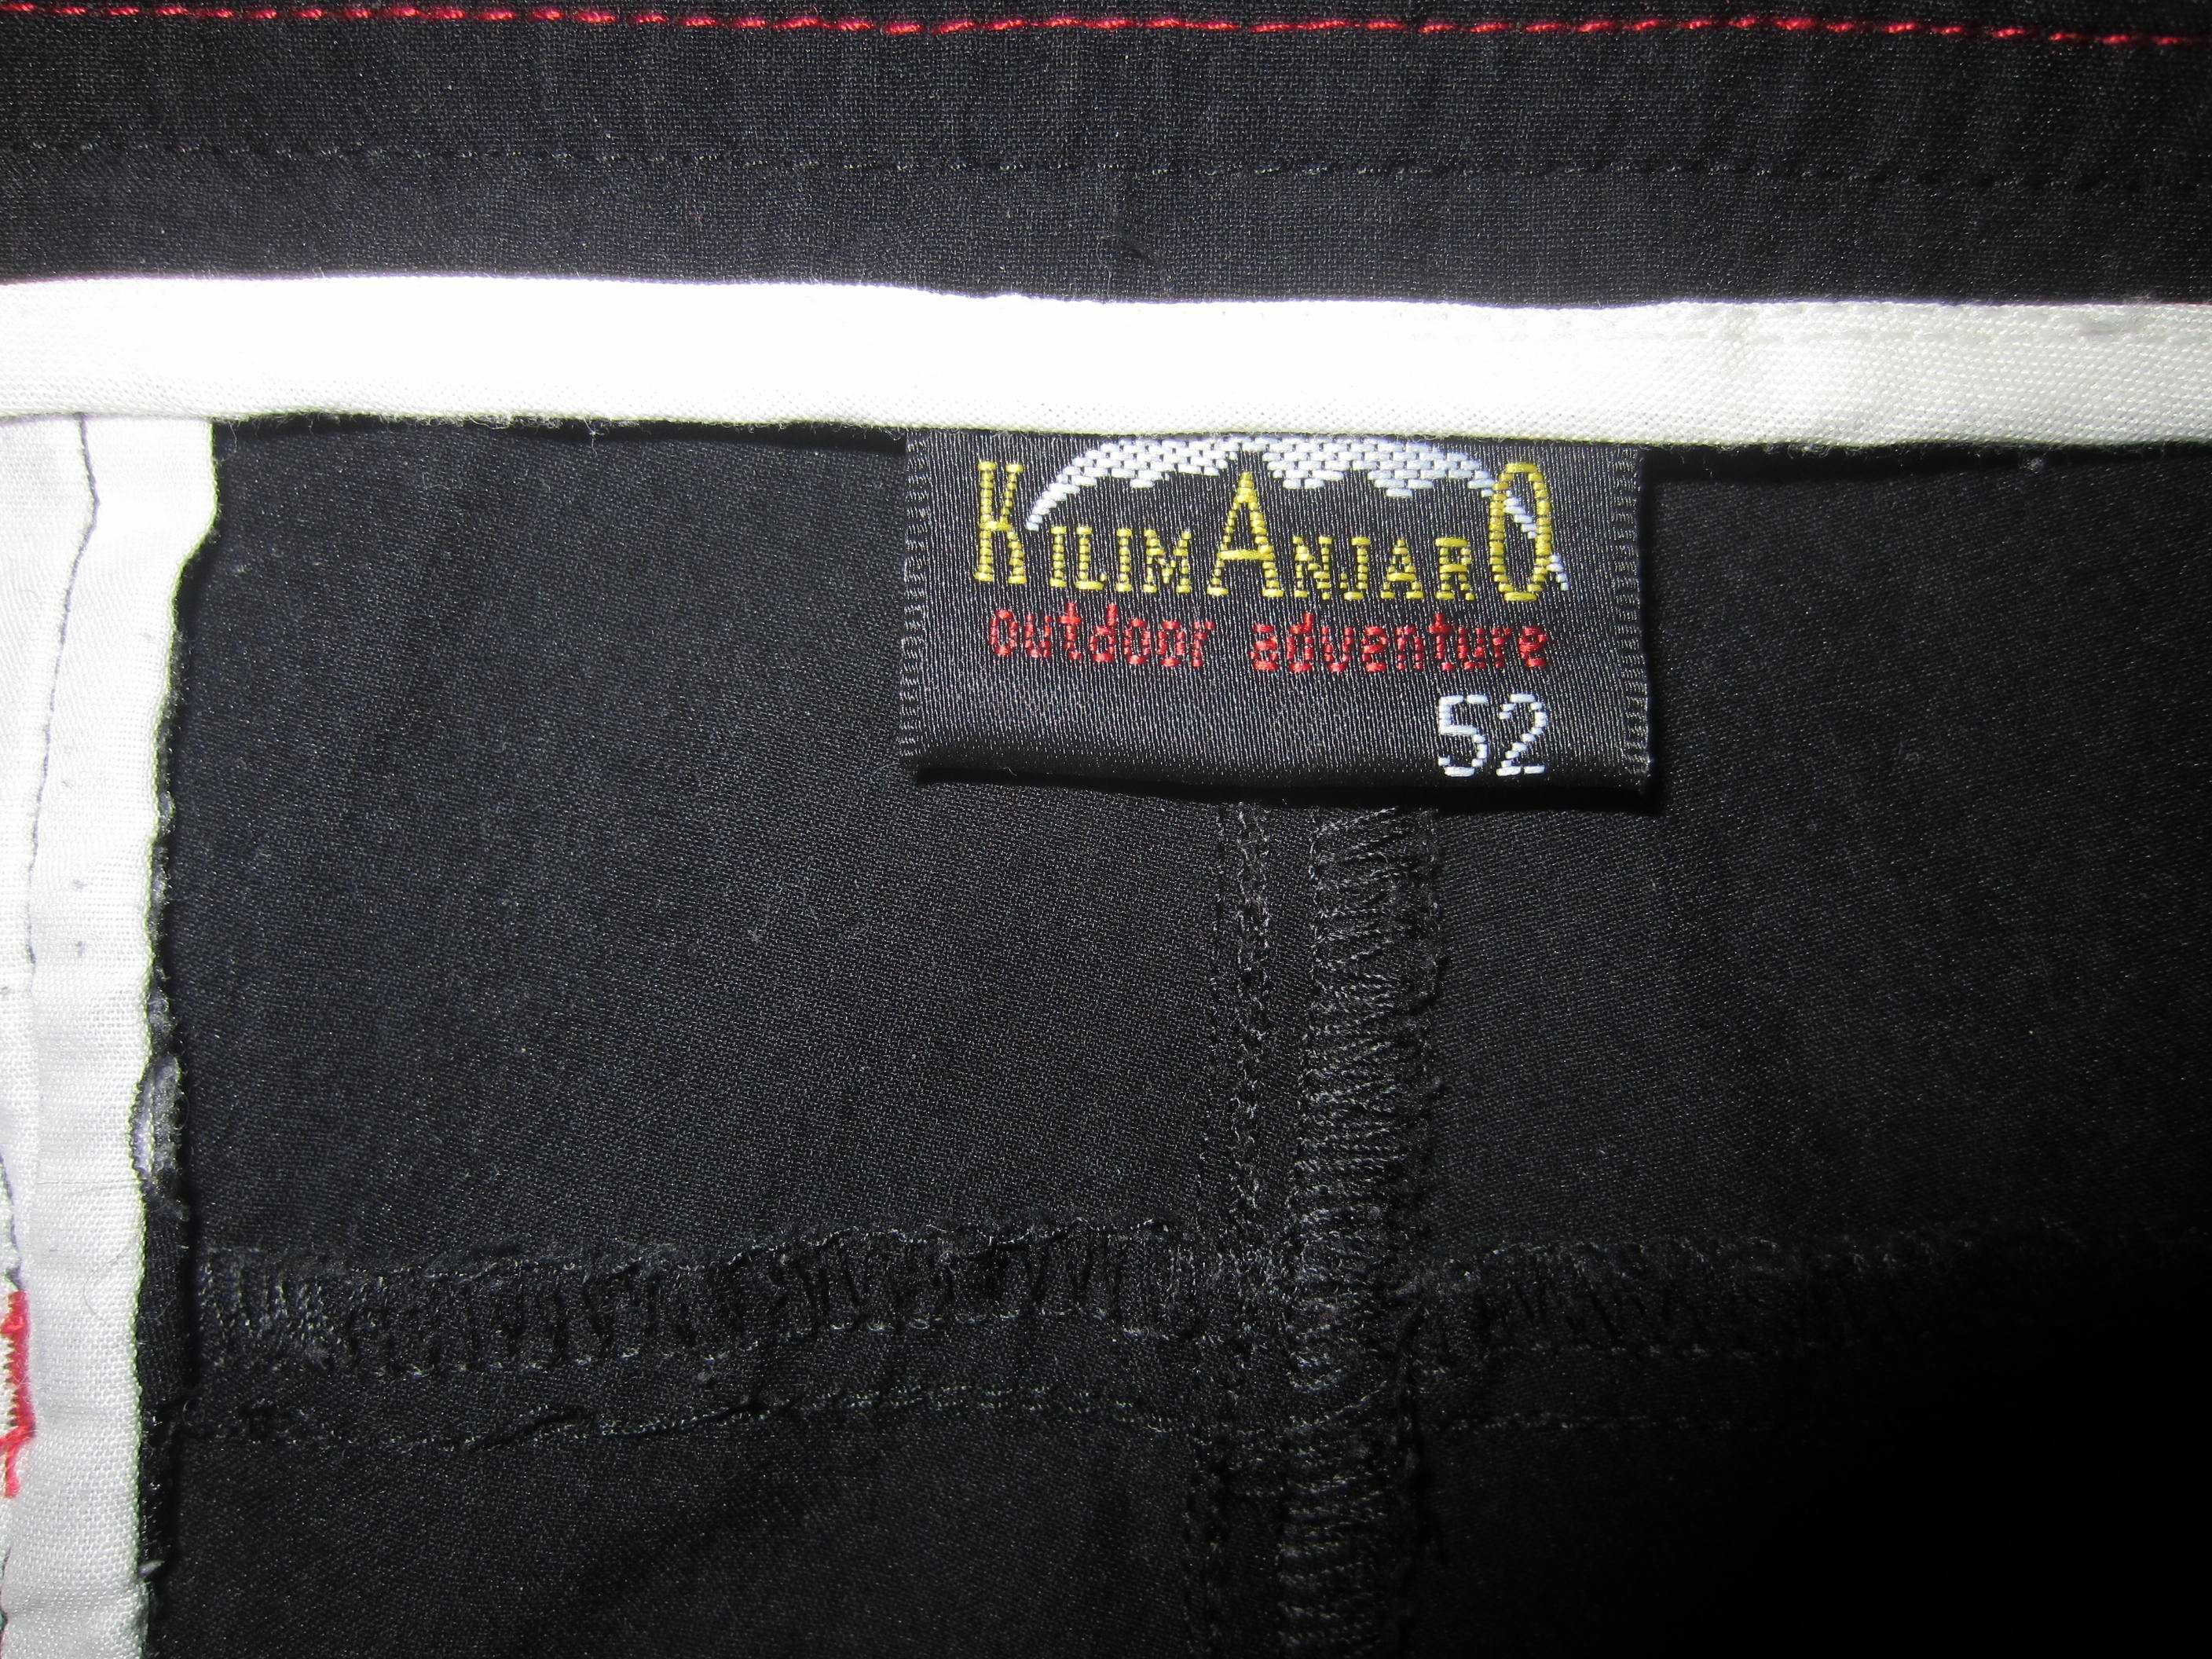 Pantalon drumetie Kilimanjaro,masura 52,polyamida,se fac bermude